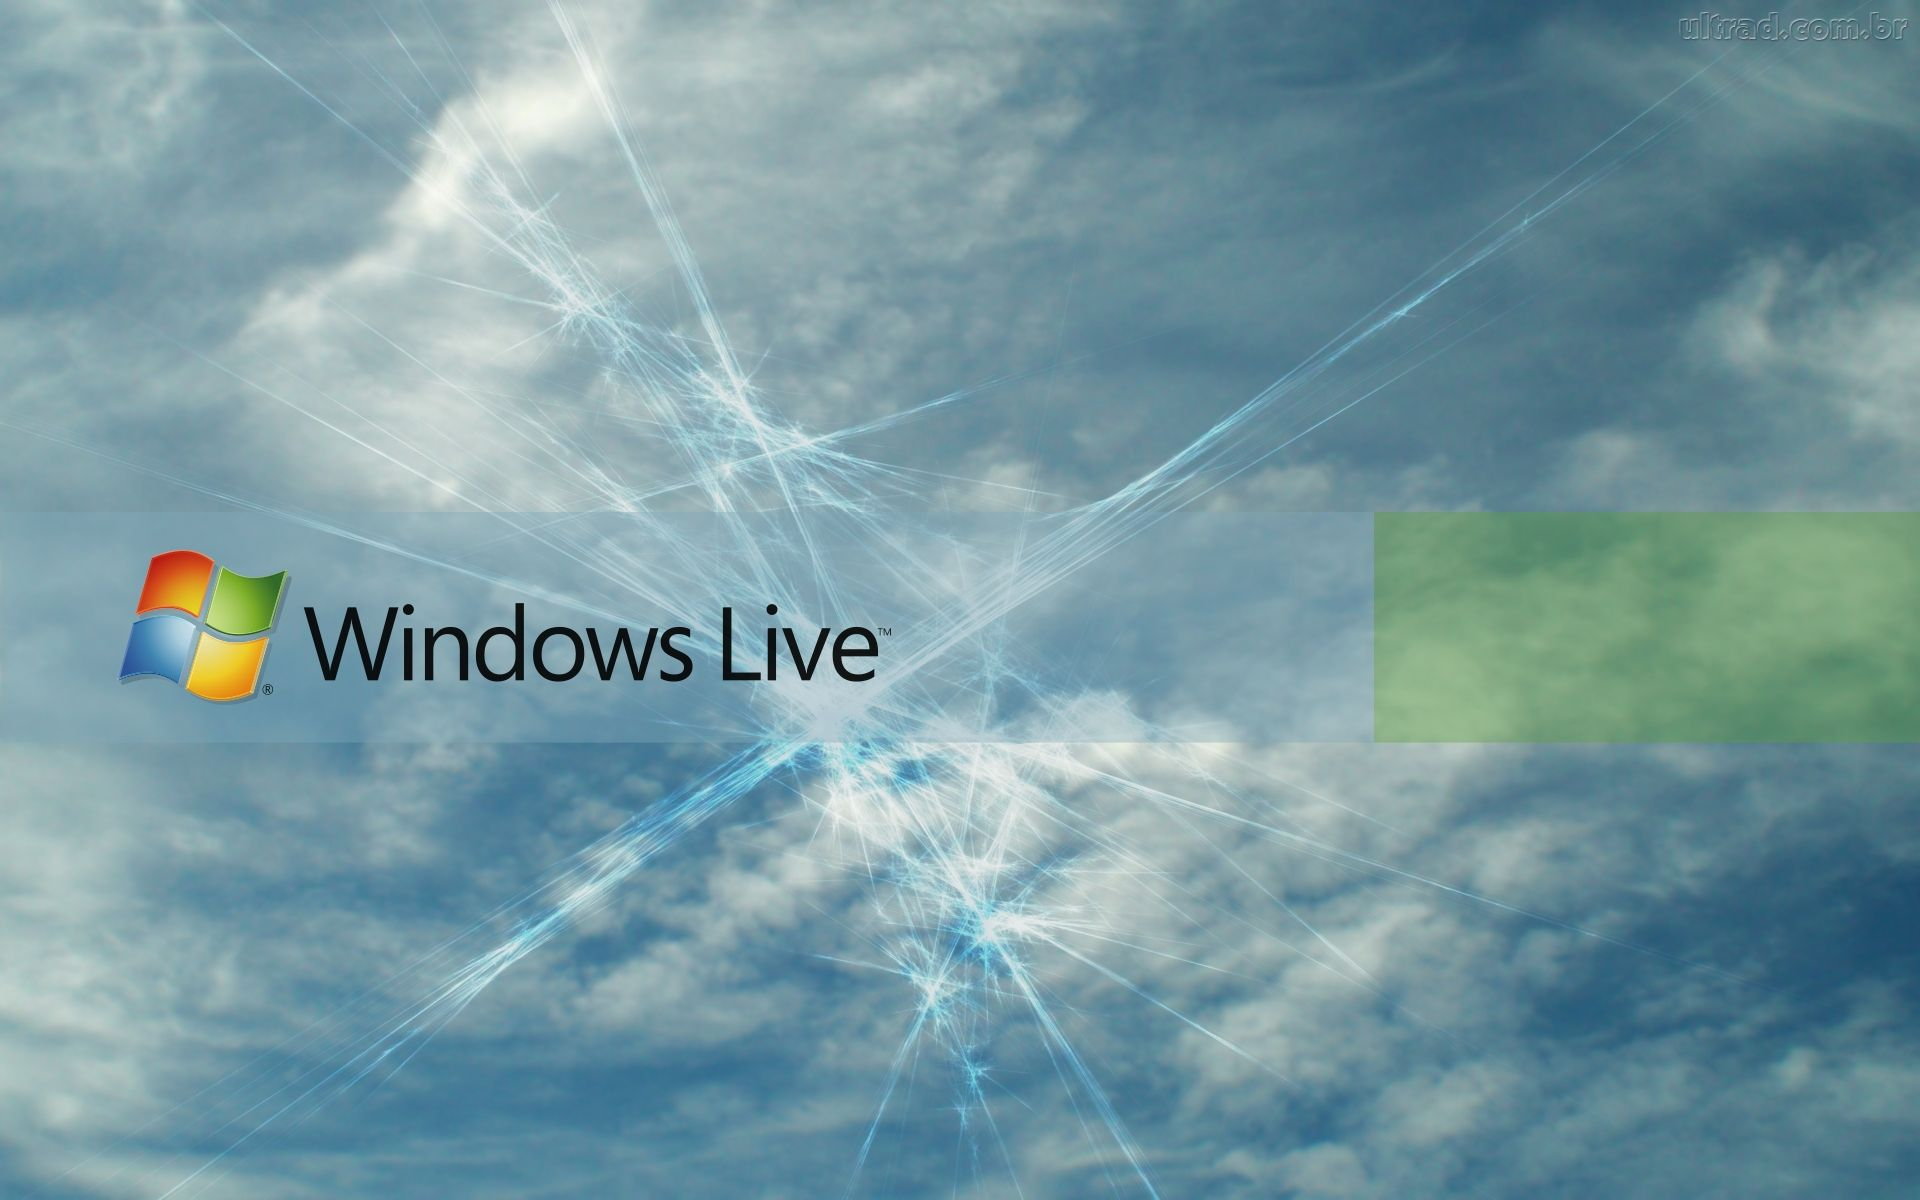 Windows Live Wallpaper HD 1920x1200 ImageBankbiz